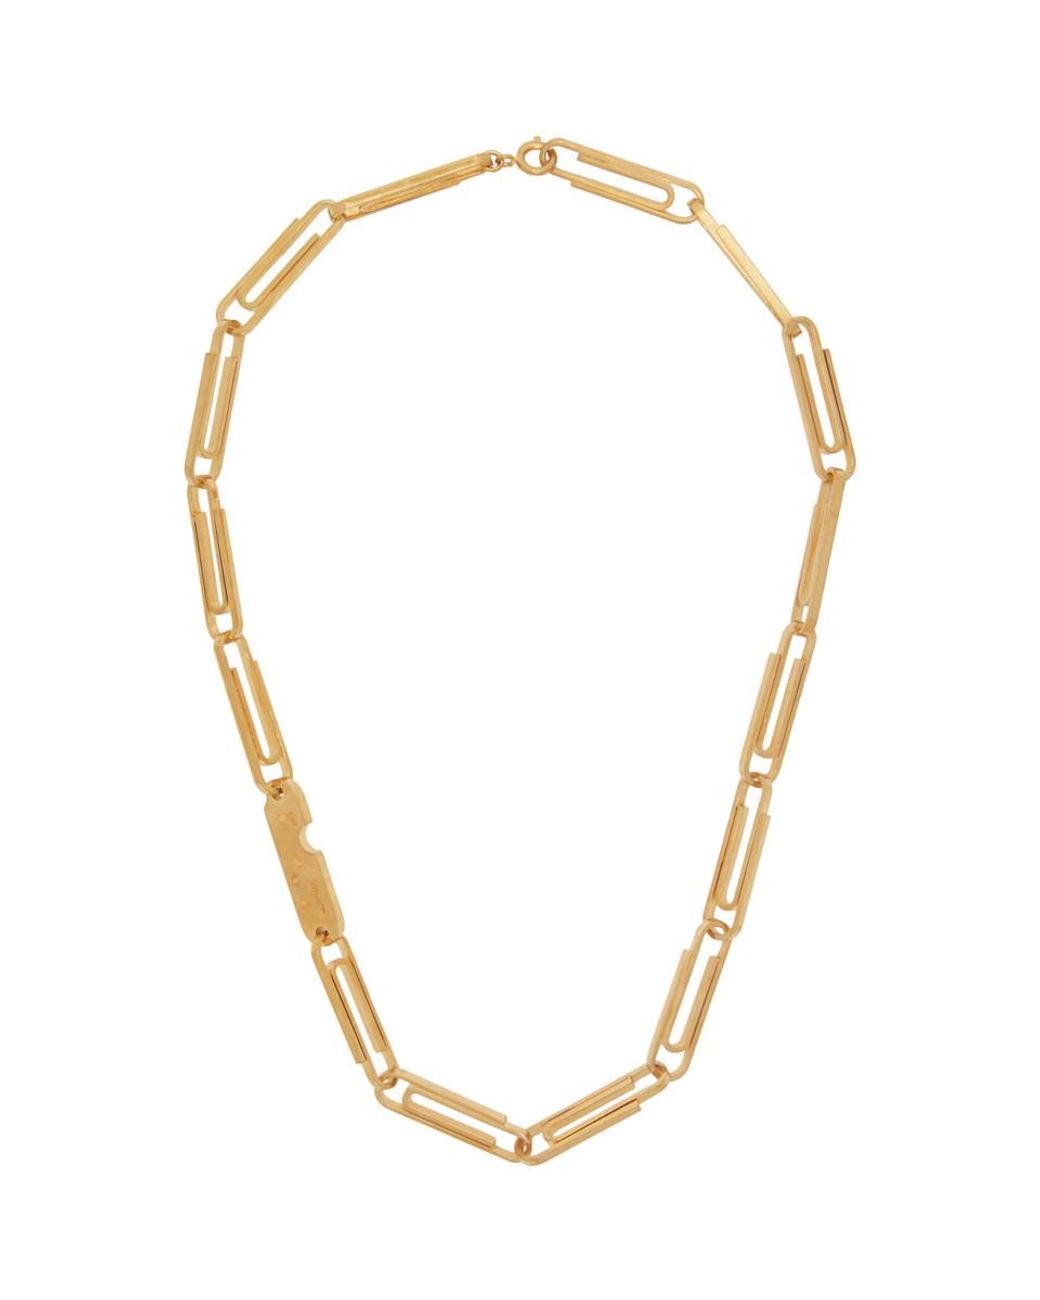 NIB OFF-WHITE C/O VIRGIL ABLOH Black Paperclip Necklace Size OS $315